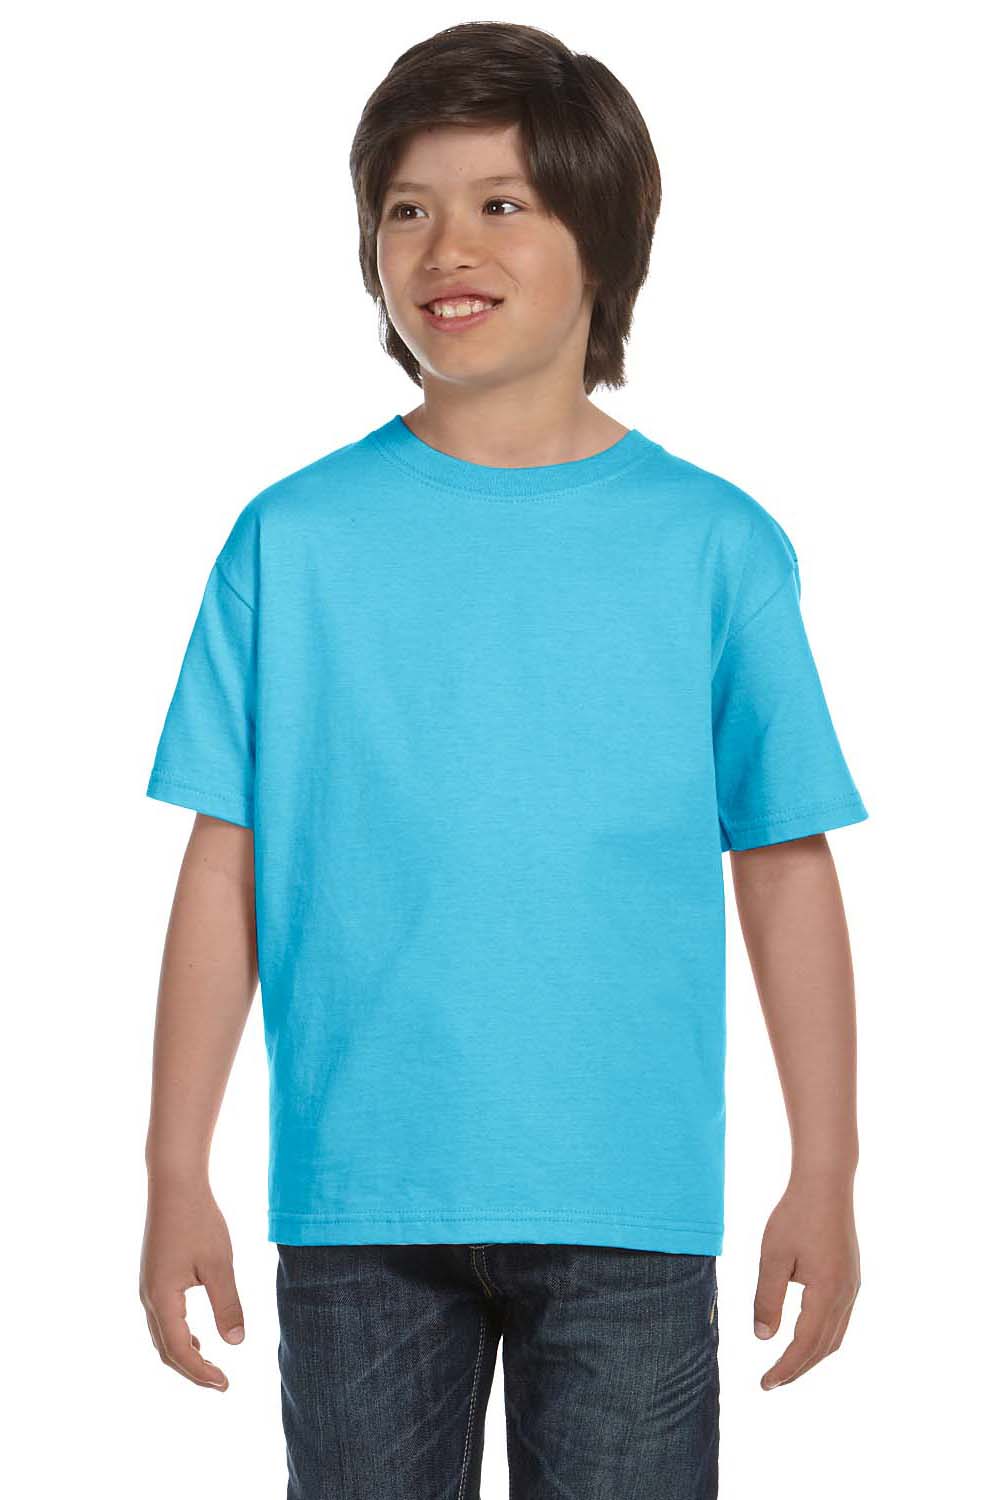 Hanes 5480 Youth ComfortSoft Short Sleeve Crewneck T-Shirt Light Blue Front